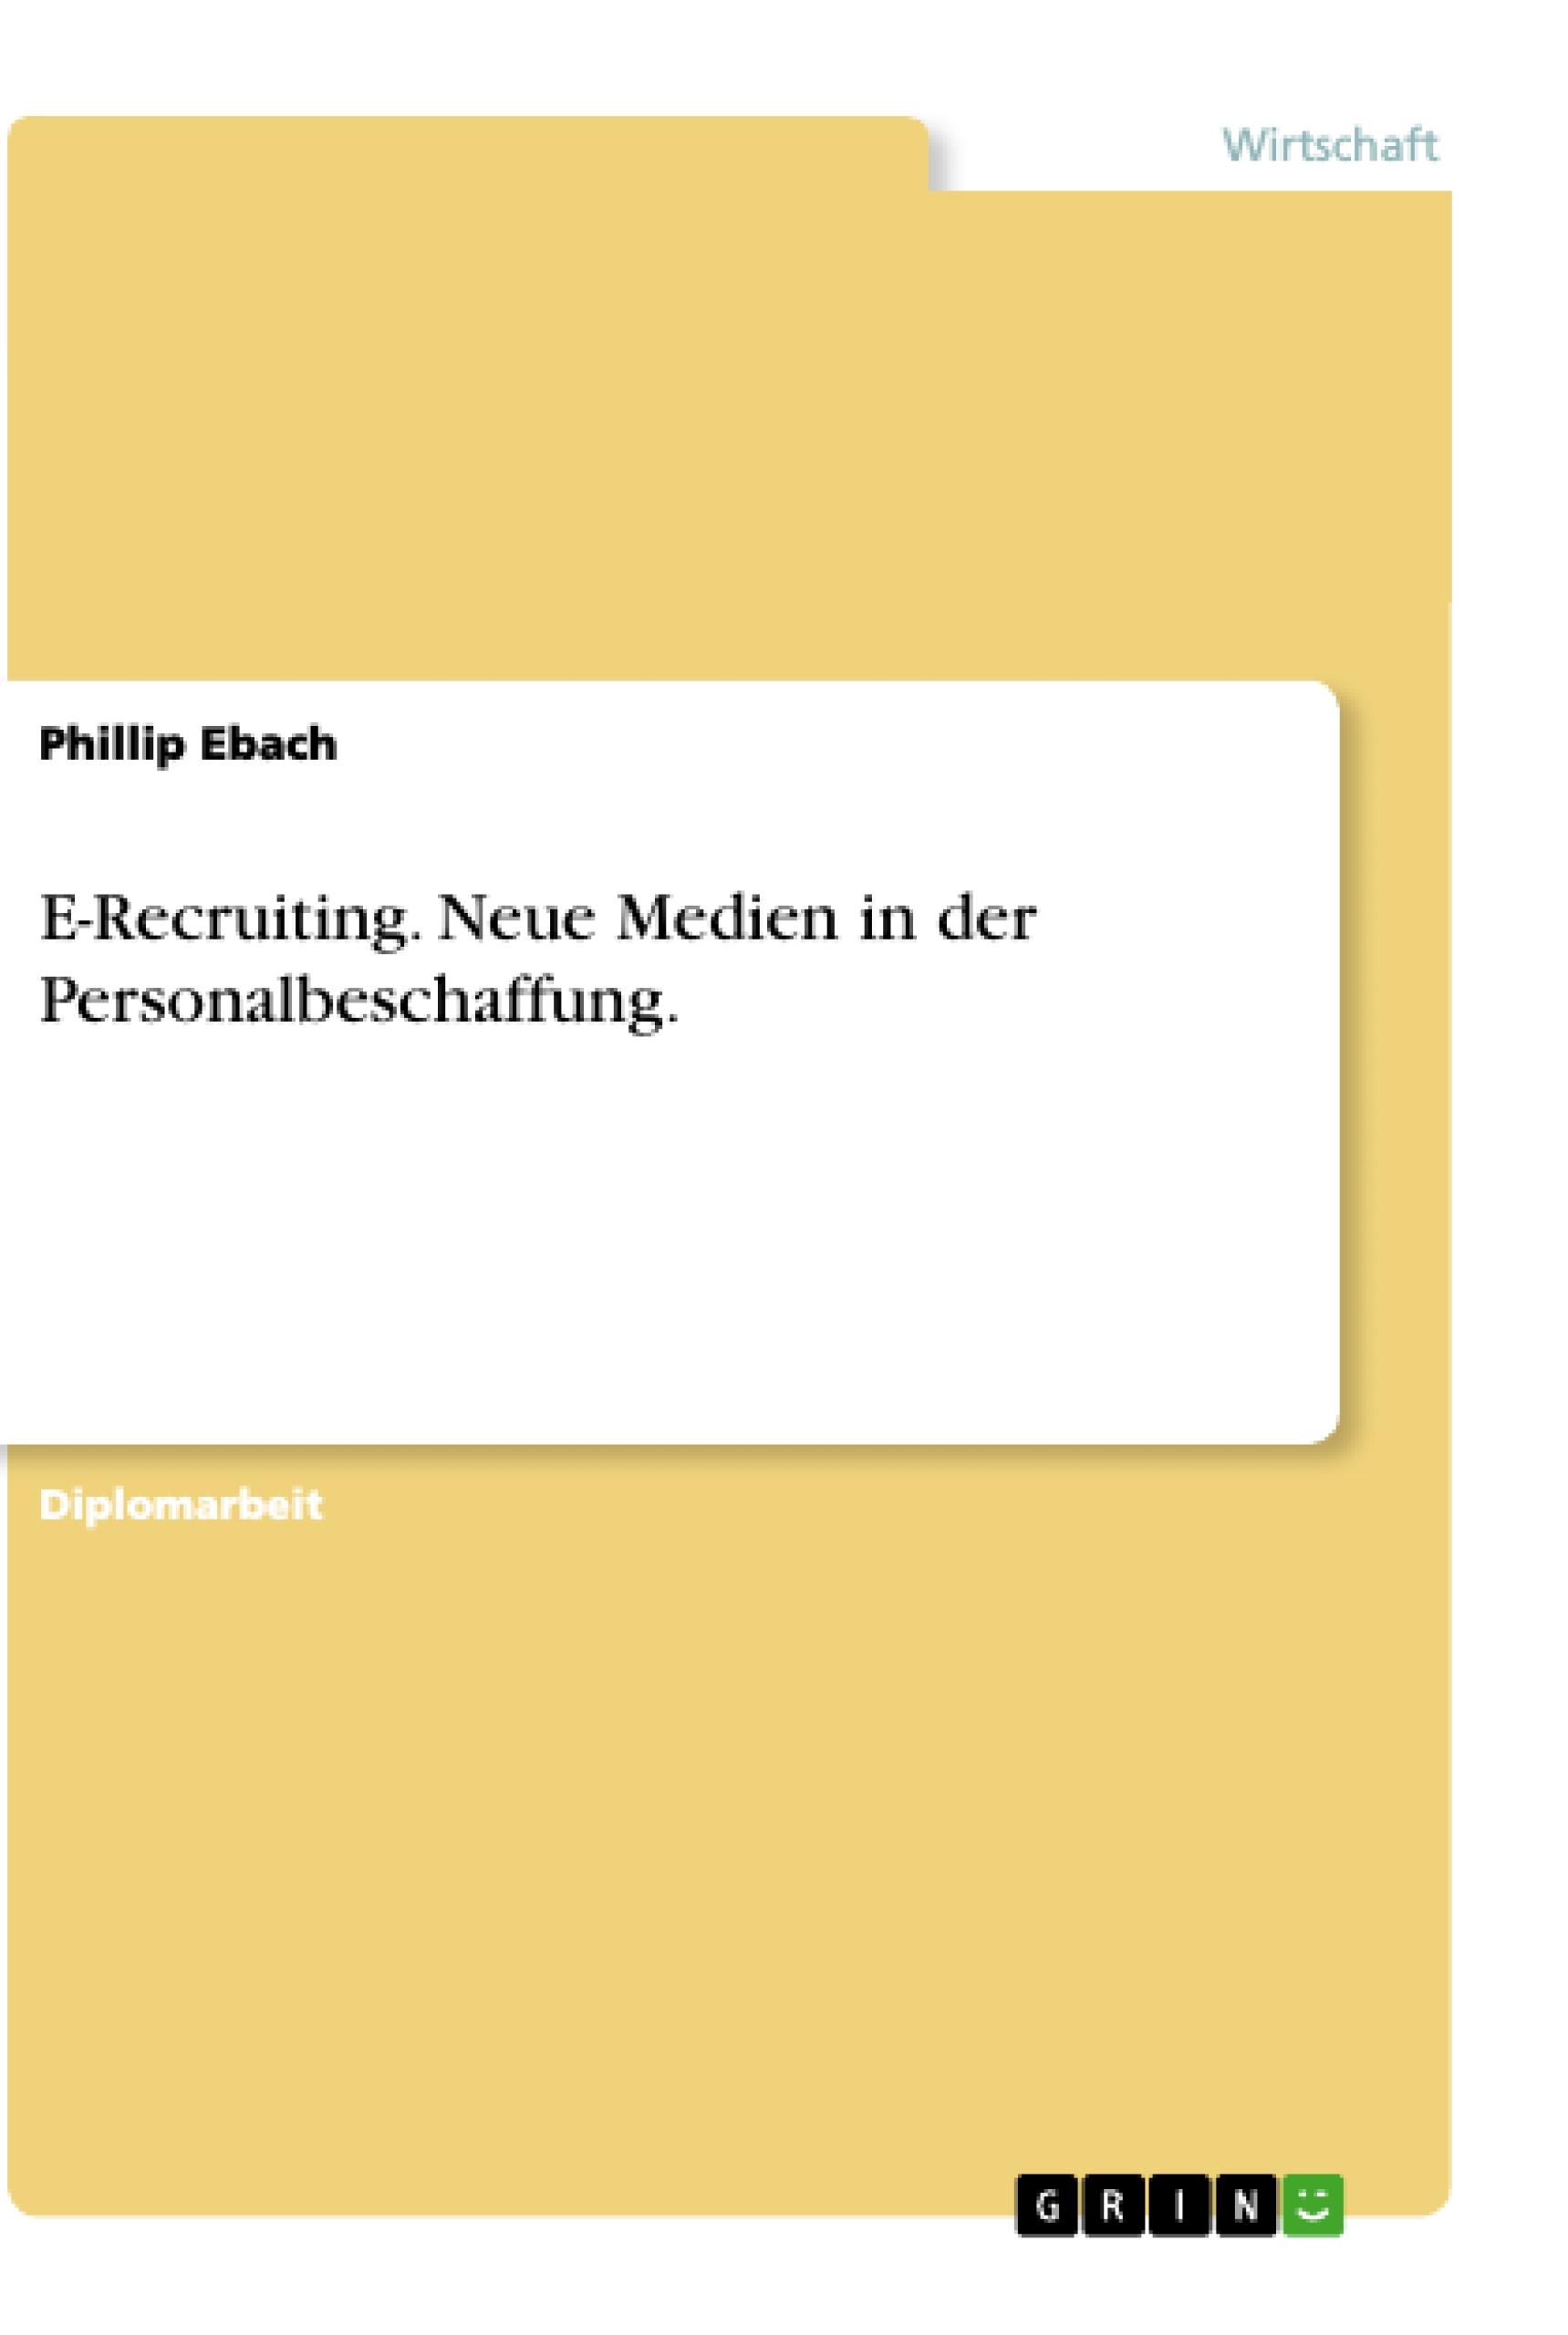 E-Recruiting. Neue Medien in der Personalbeschaffung. - Ebach, Phillip